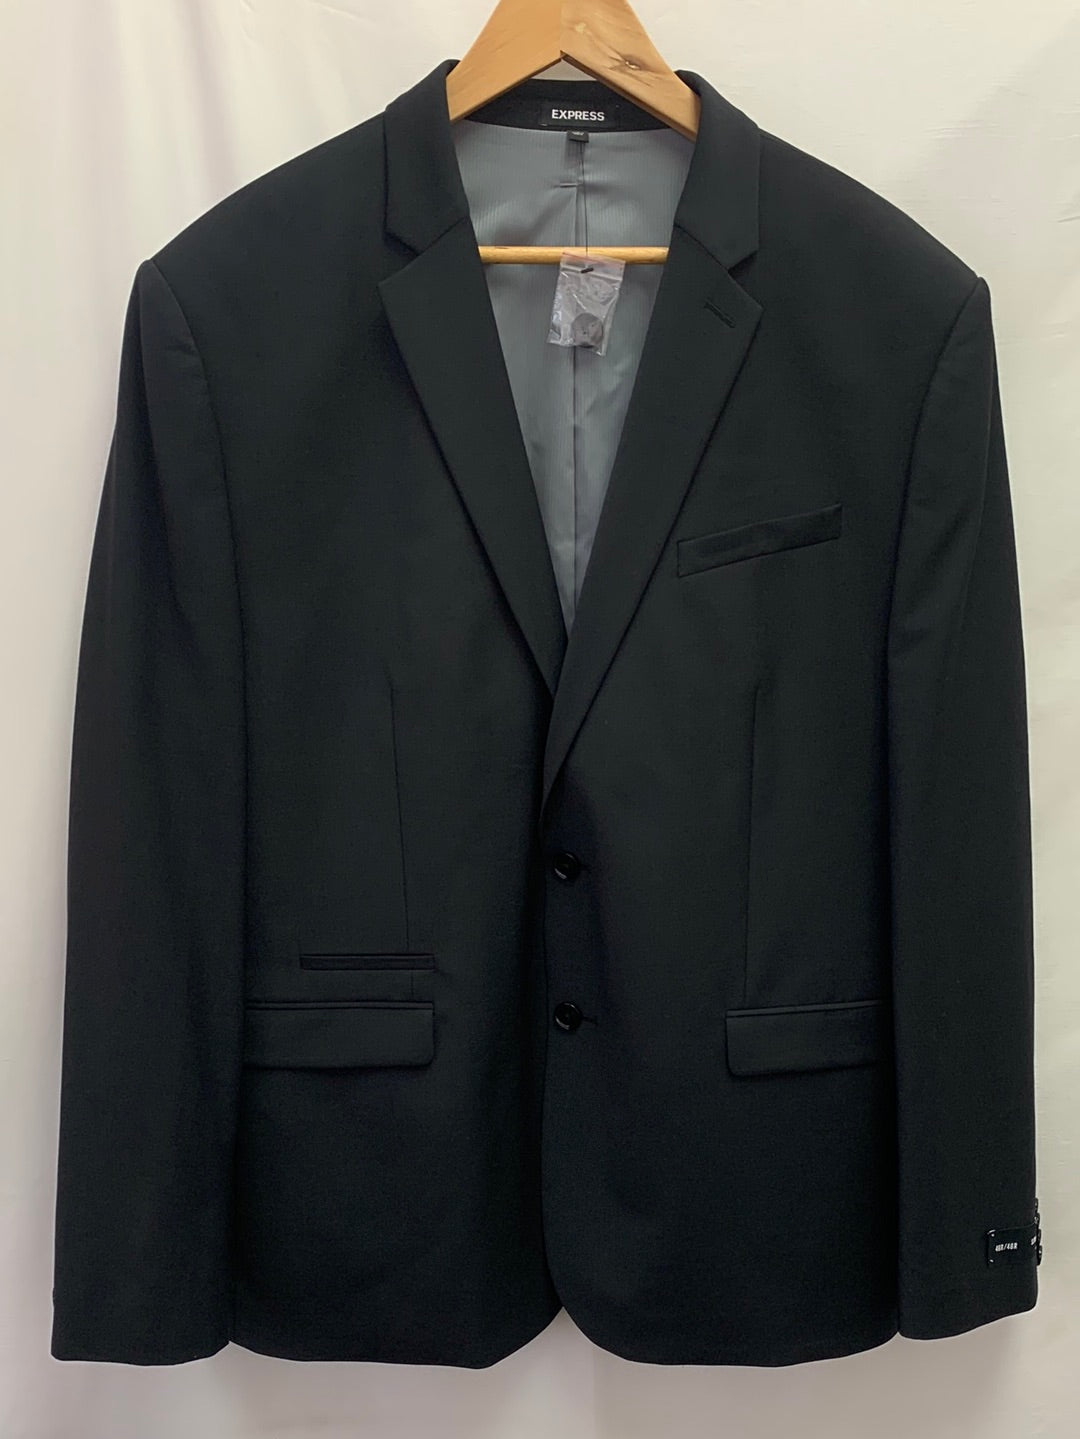 NWT - EXPRESS Black Slim Wool-Blend Modern Tech Suit Jacket - 48R